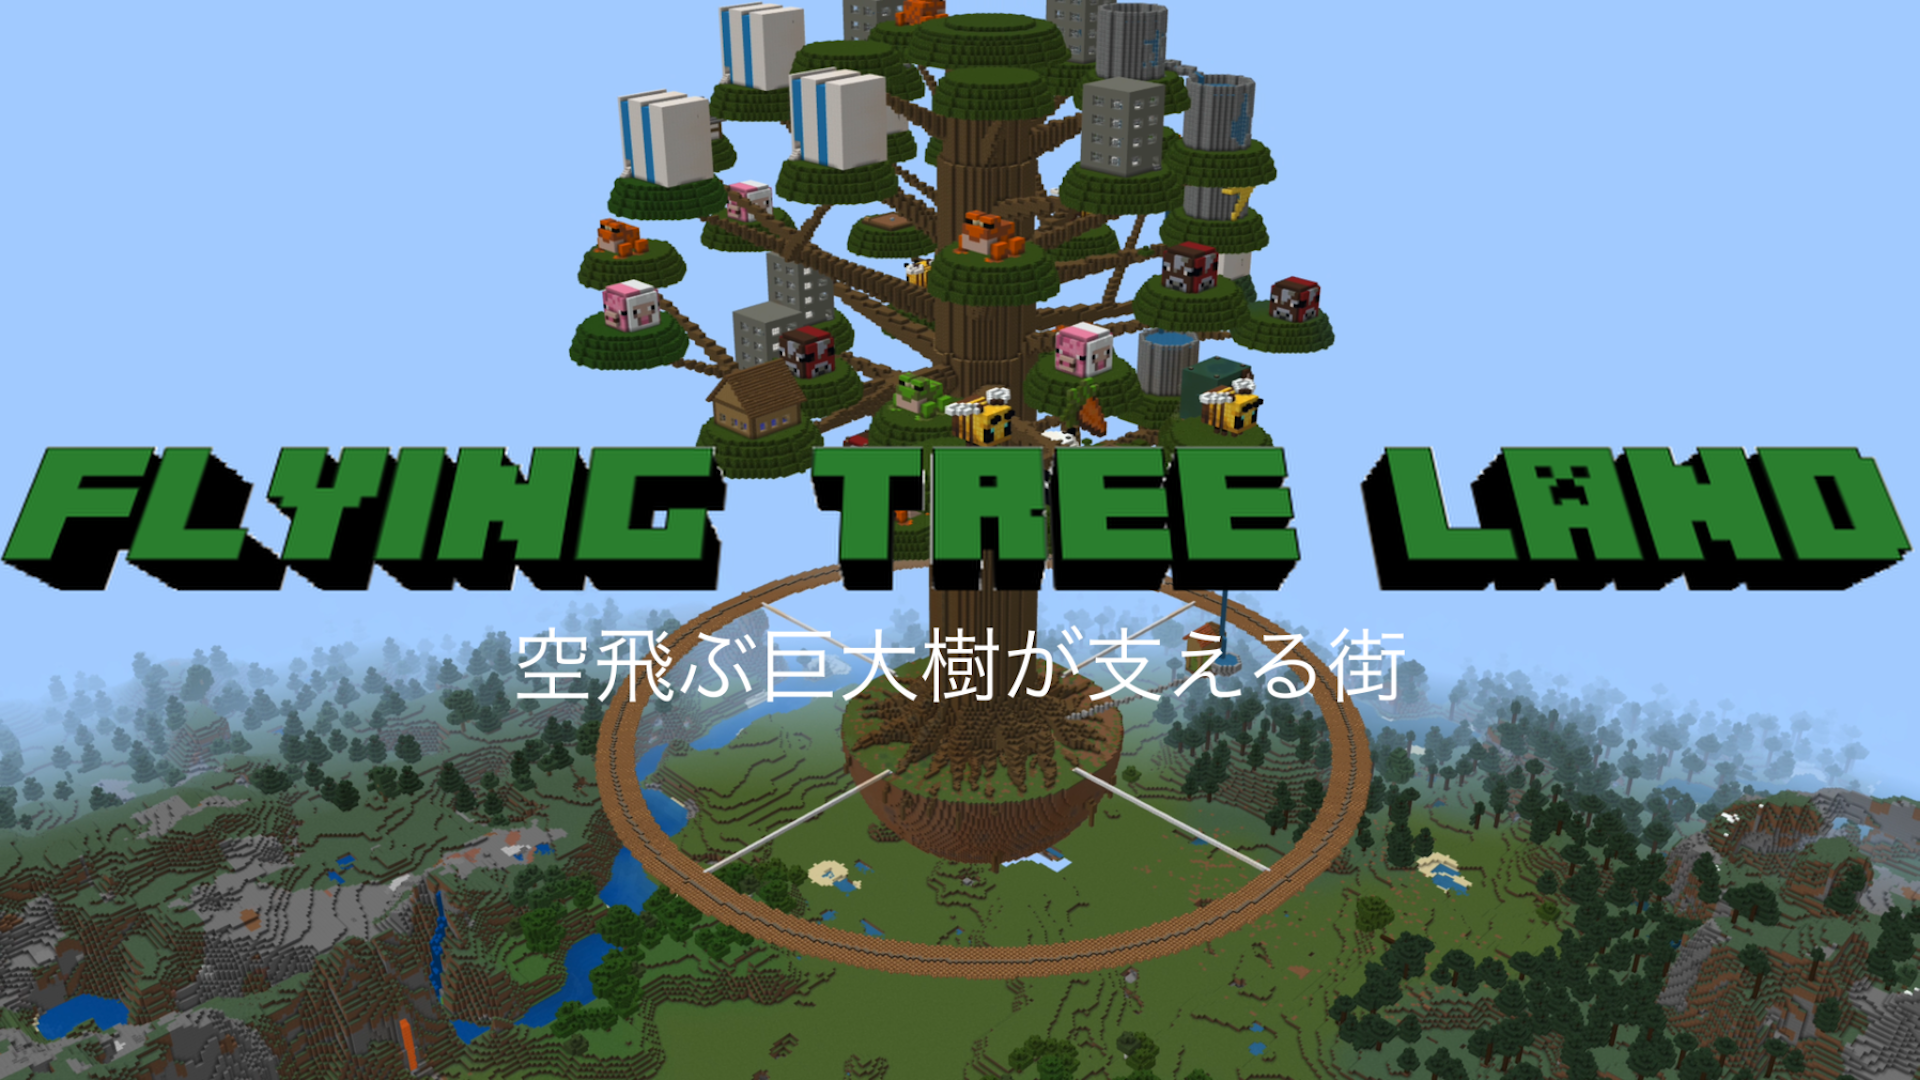 〜FLYING TREE LAND〜空飛ぶ巨大樹が支える街